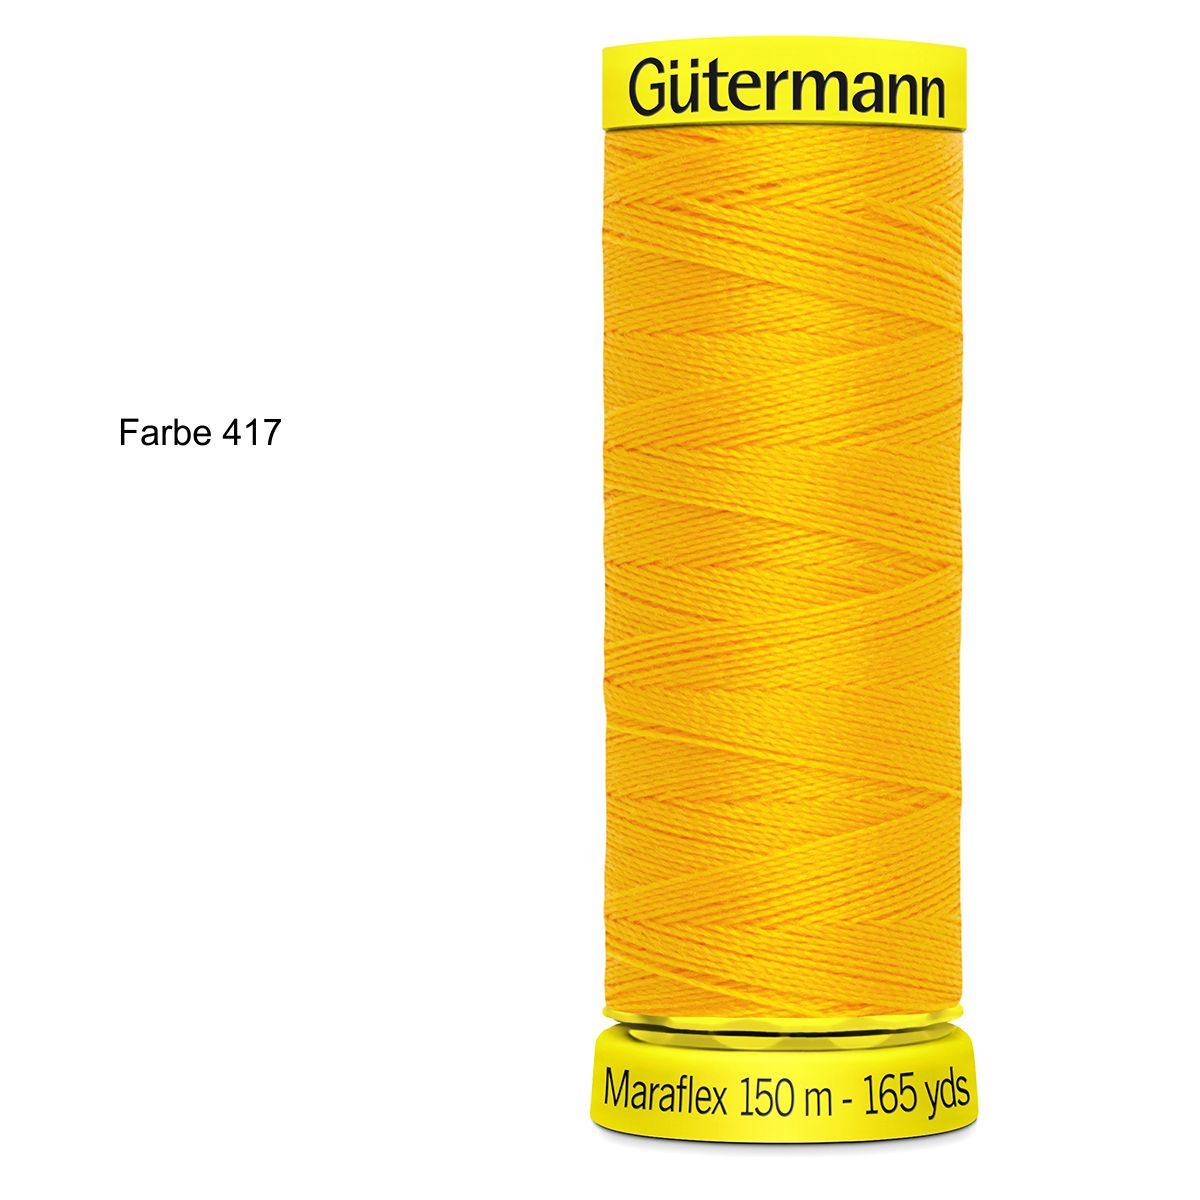 Gütermann Maraflex Elastic- Nähgarn 150m Farbe 417